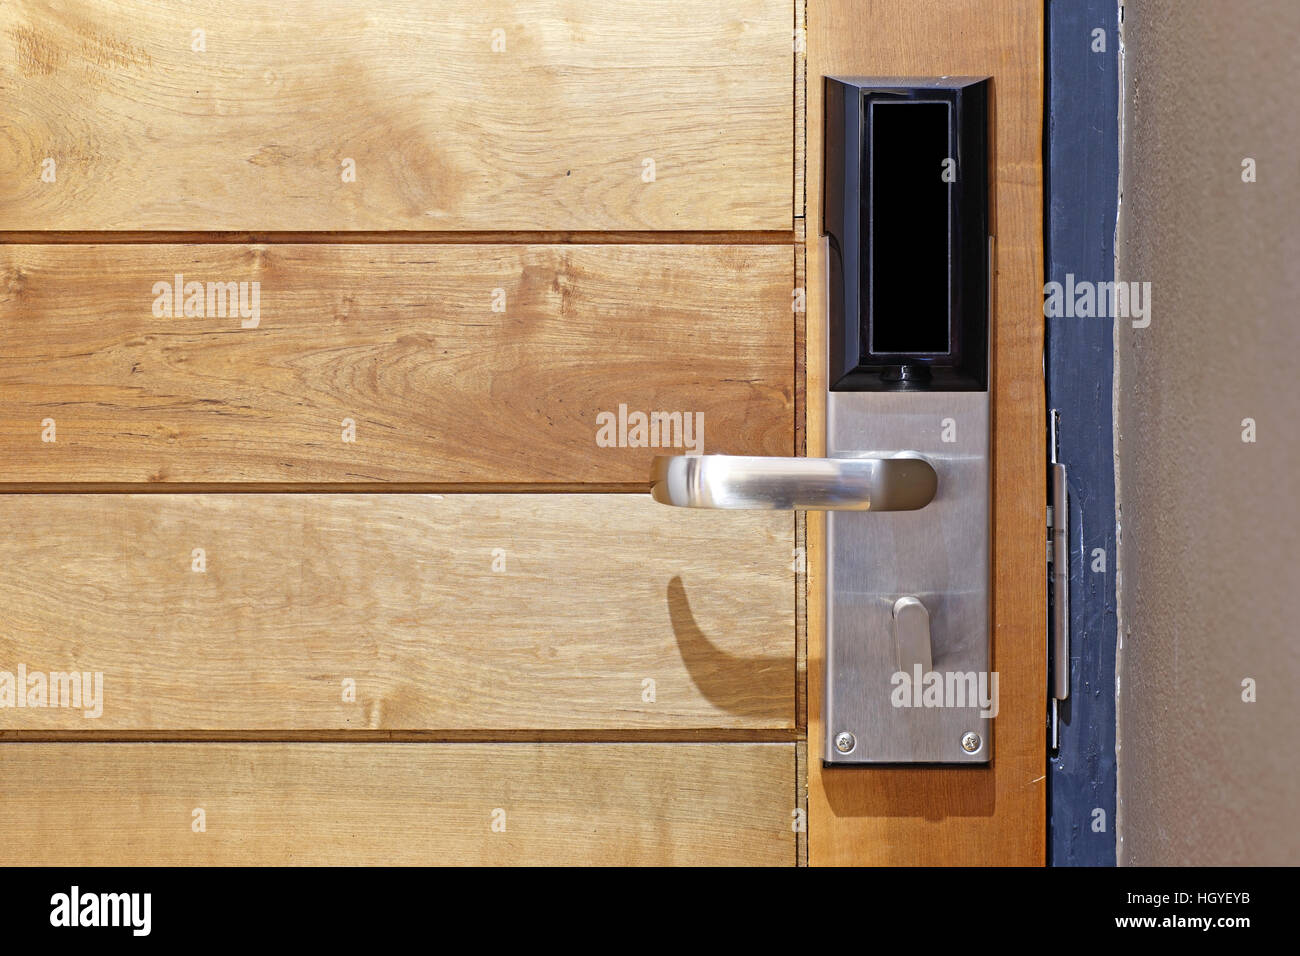 hotel electronic card lock on wooden door Stock Photo